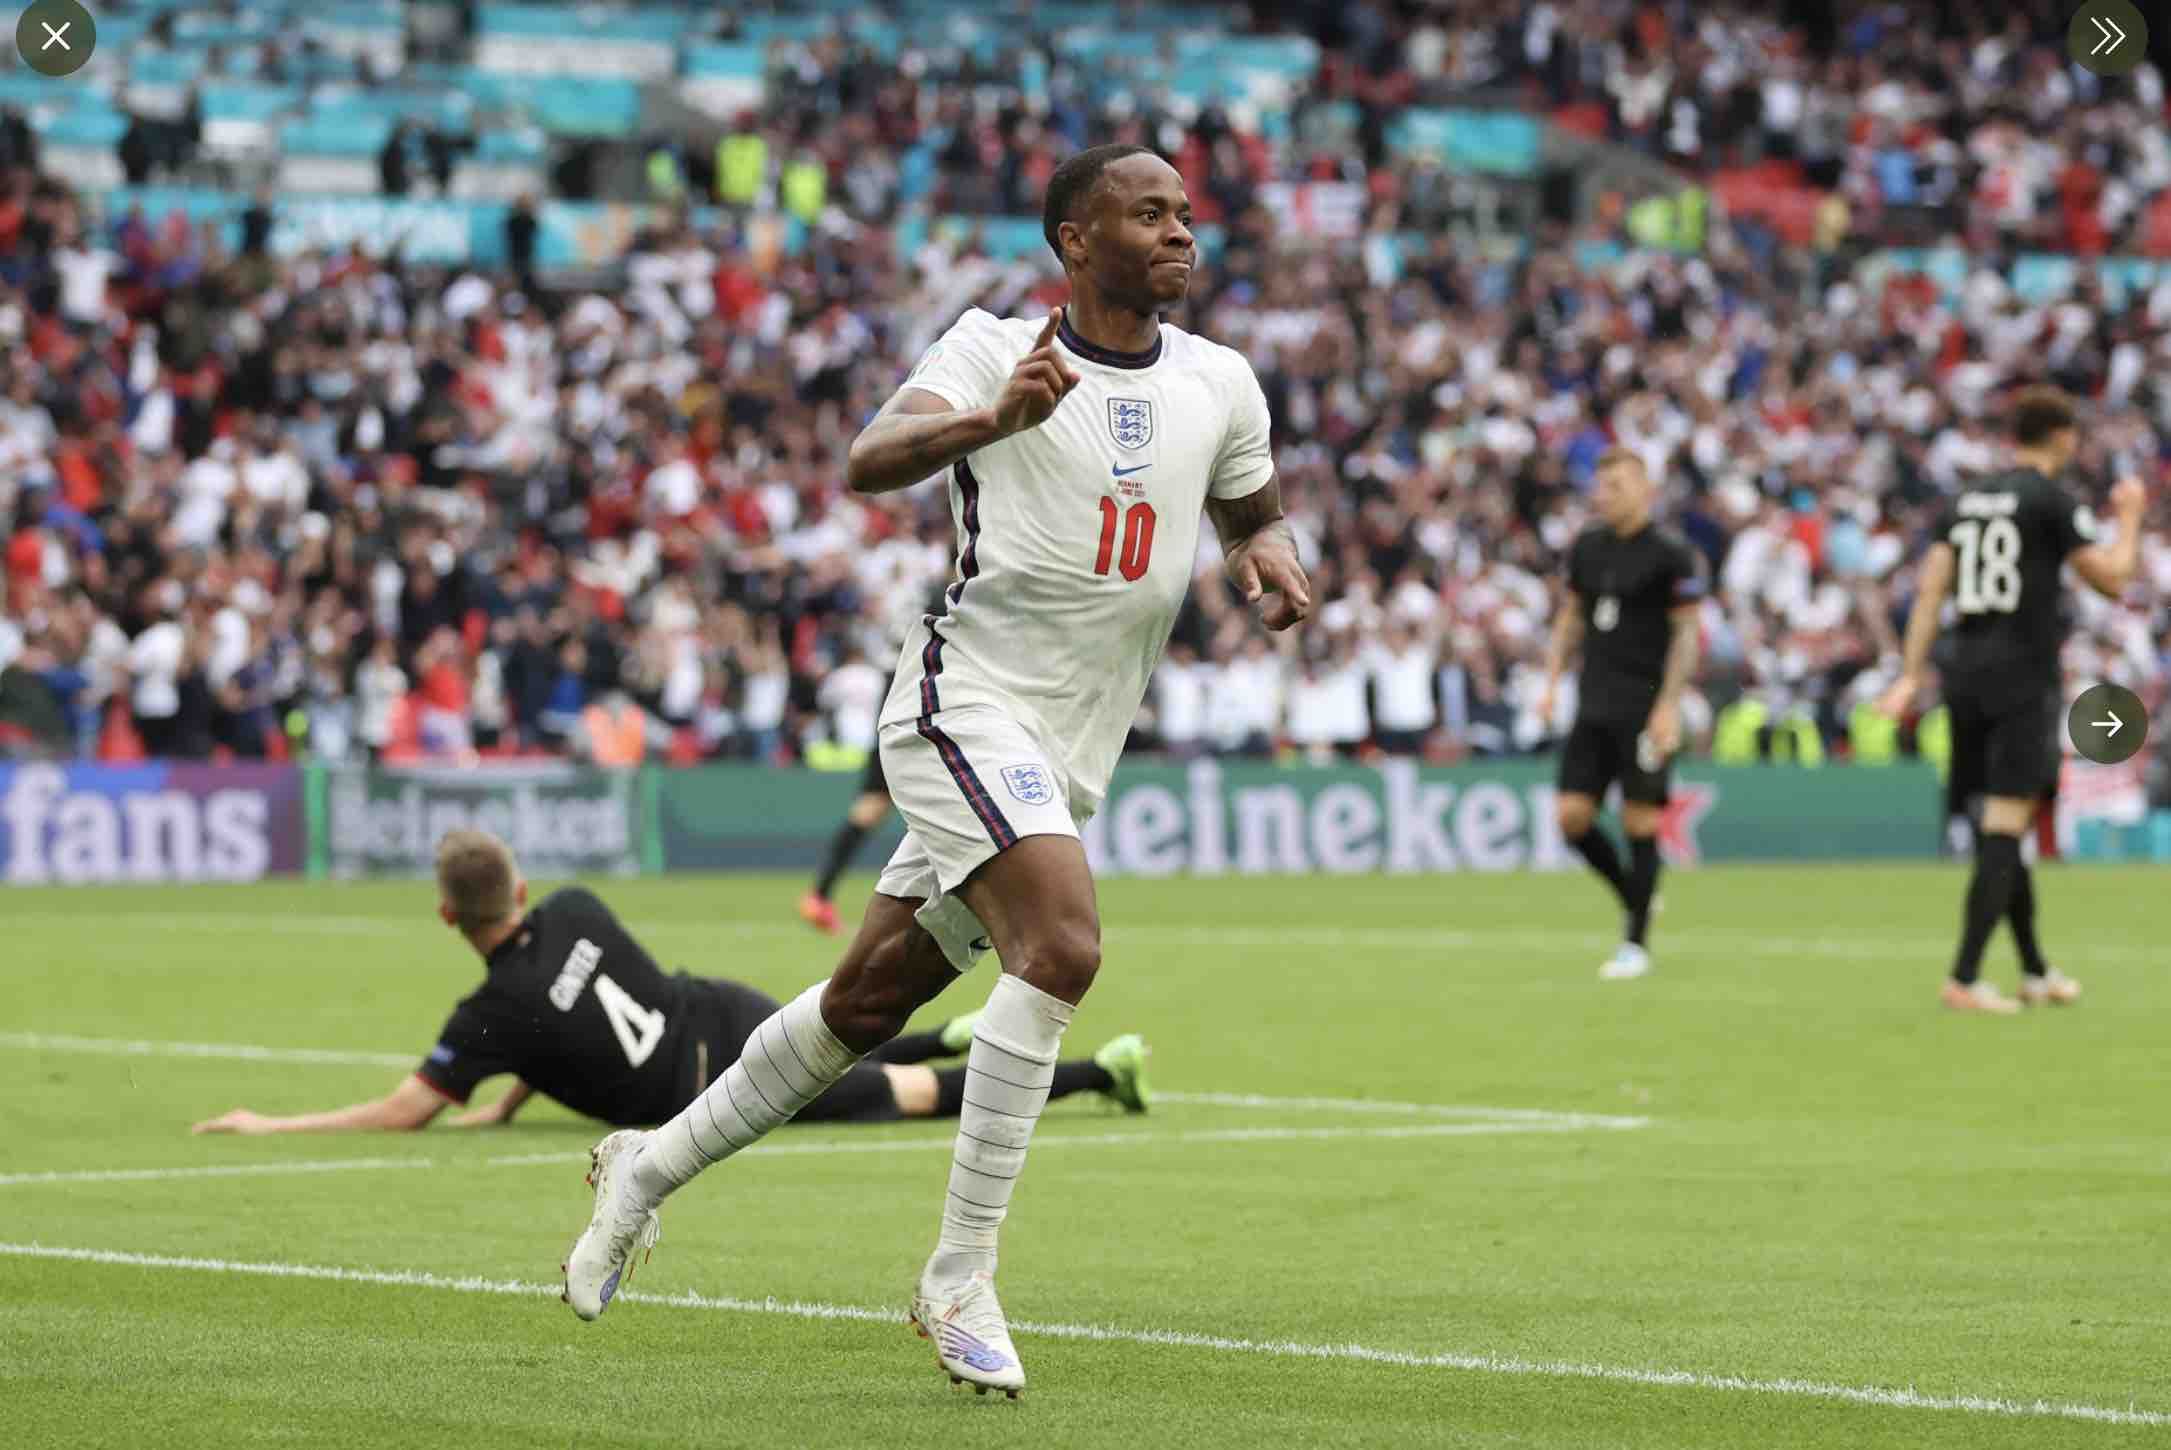 Inggris melaju ke perempat final usal jebol gawang Jerman 2-0.